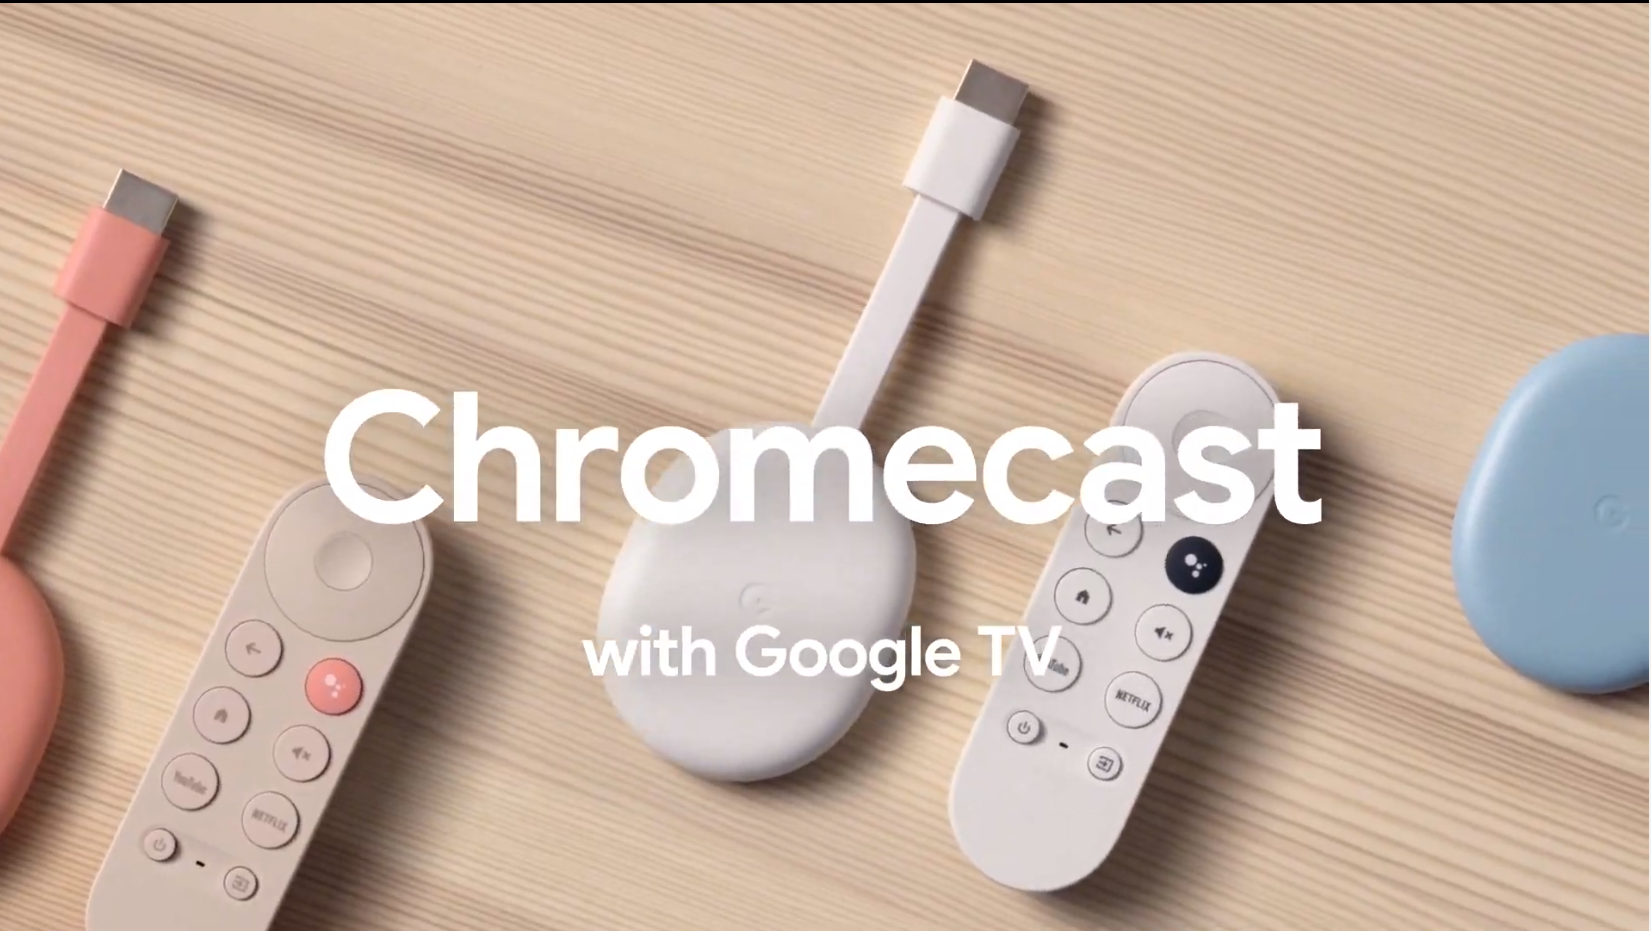 Chromecst pẹlu Google TV